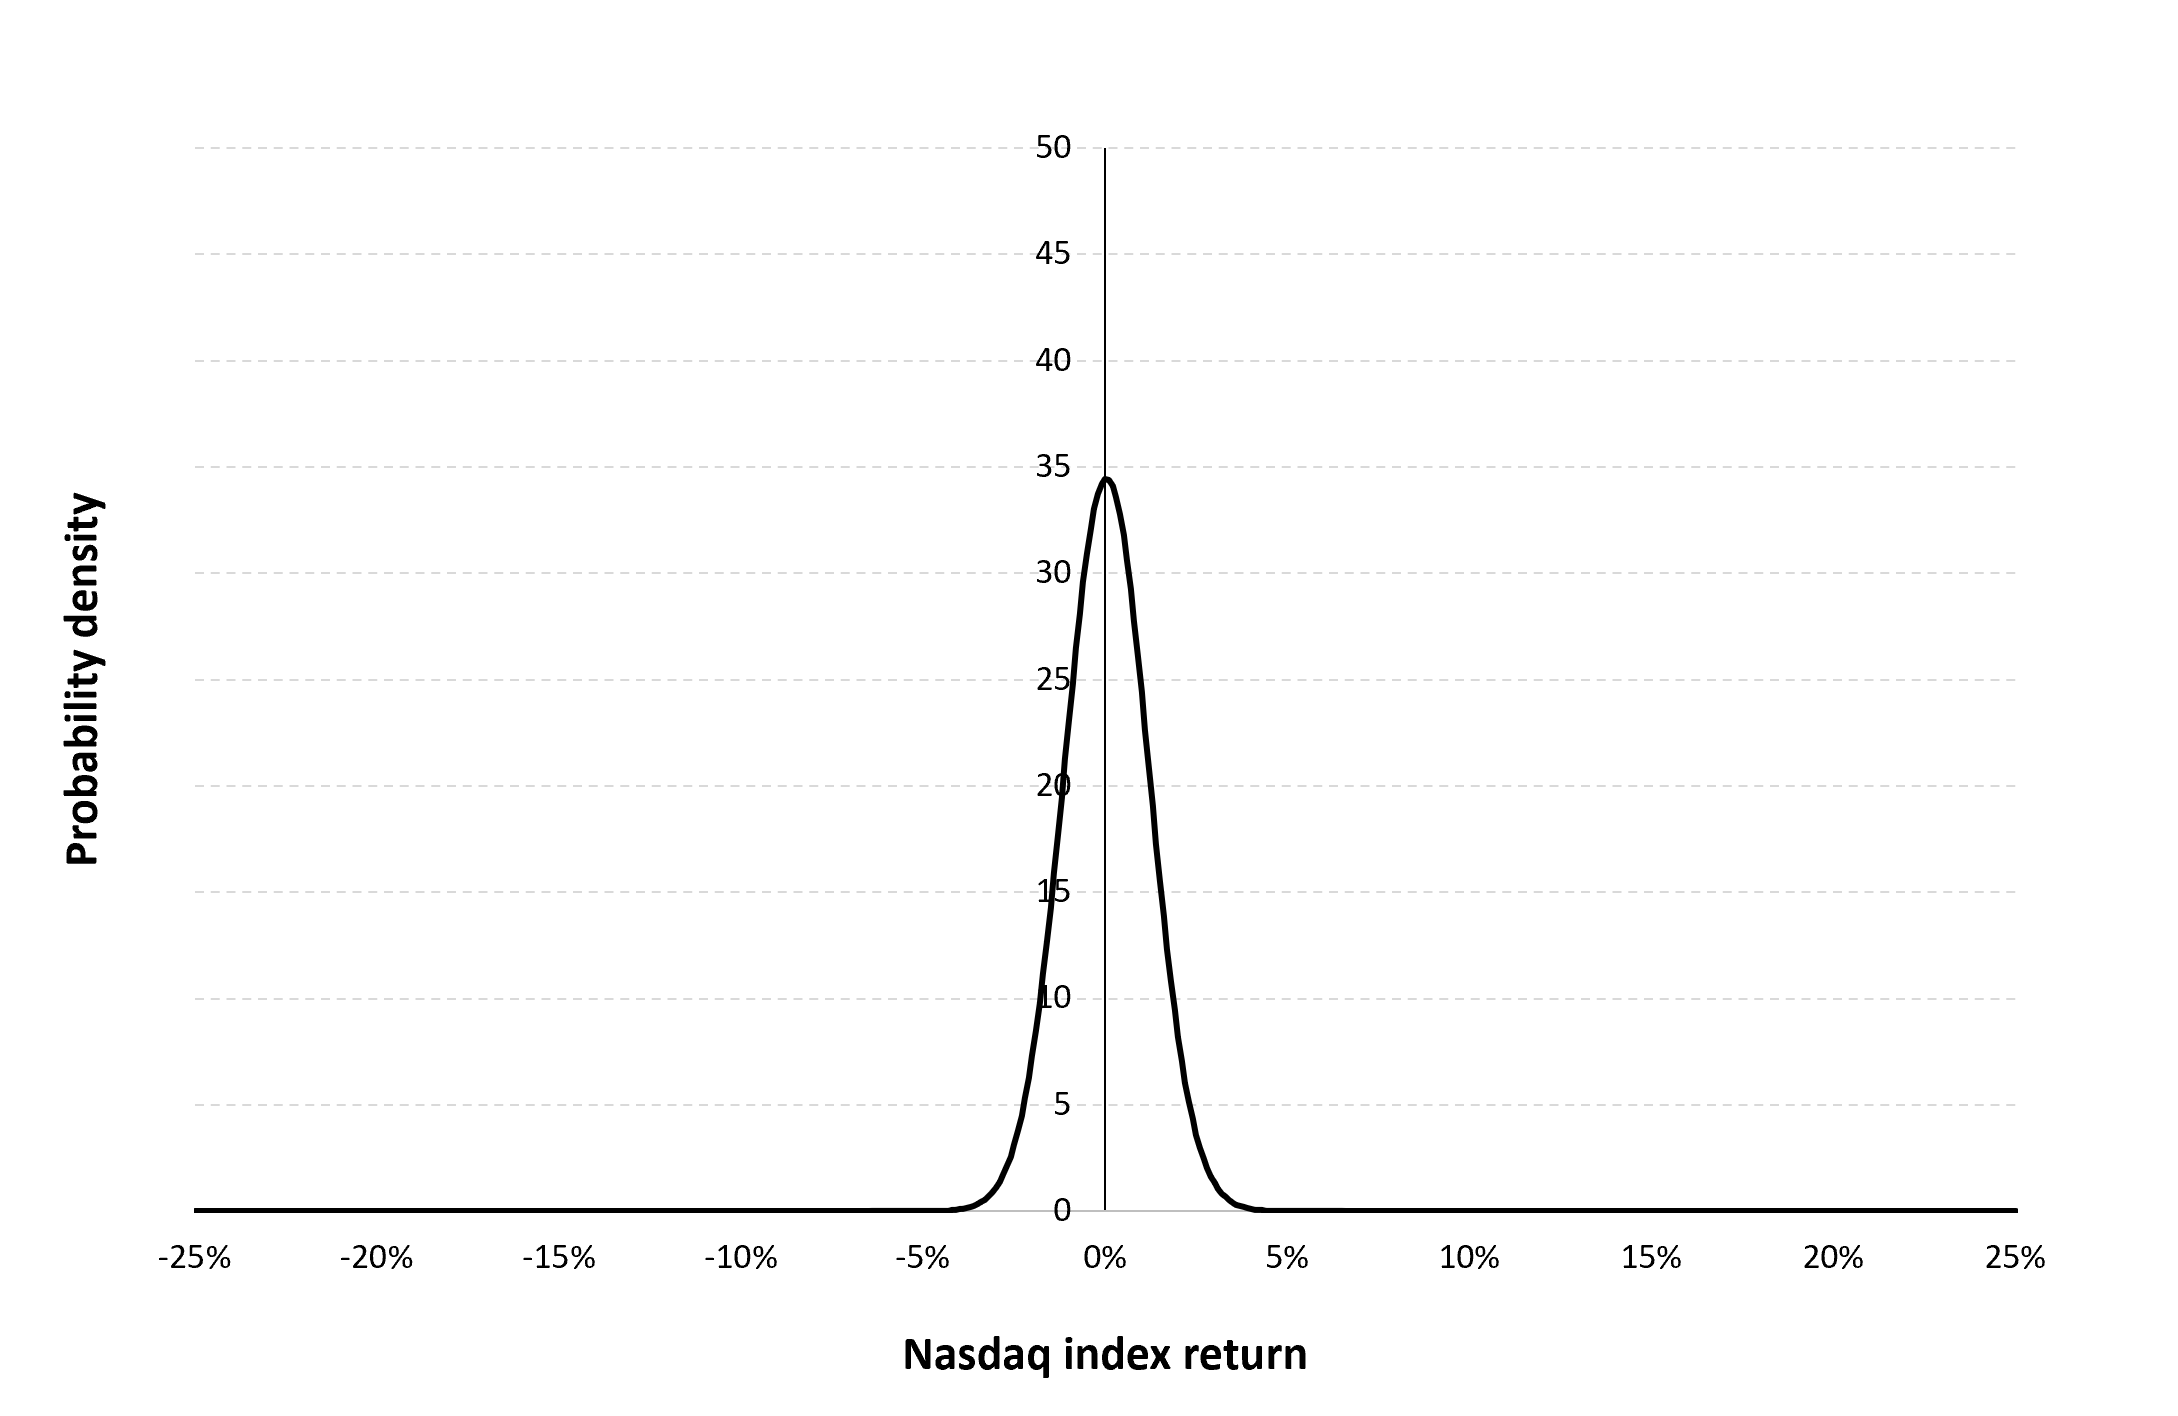 Gaussian distribution of the daily Nasdaq index returns